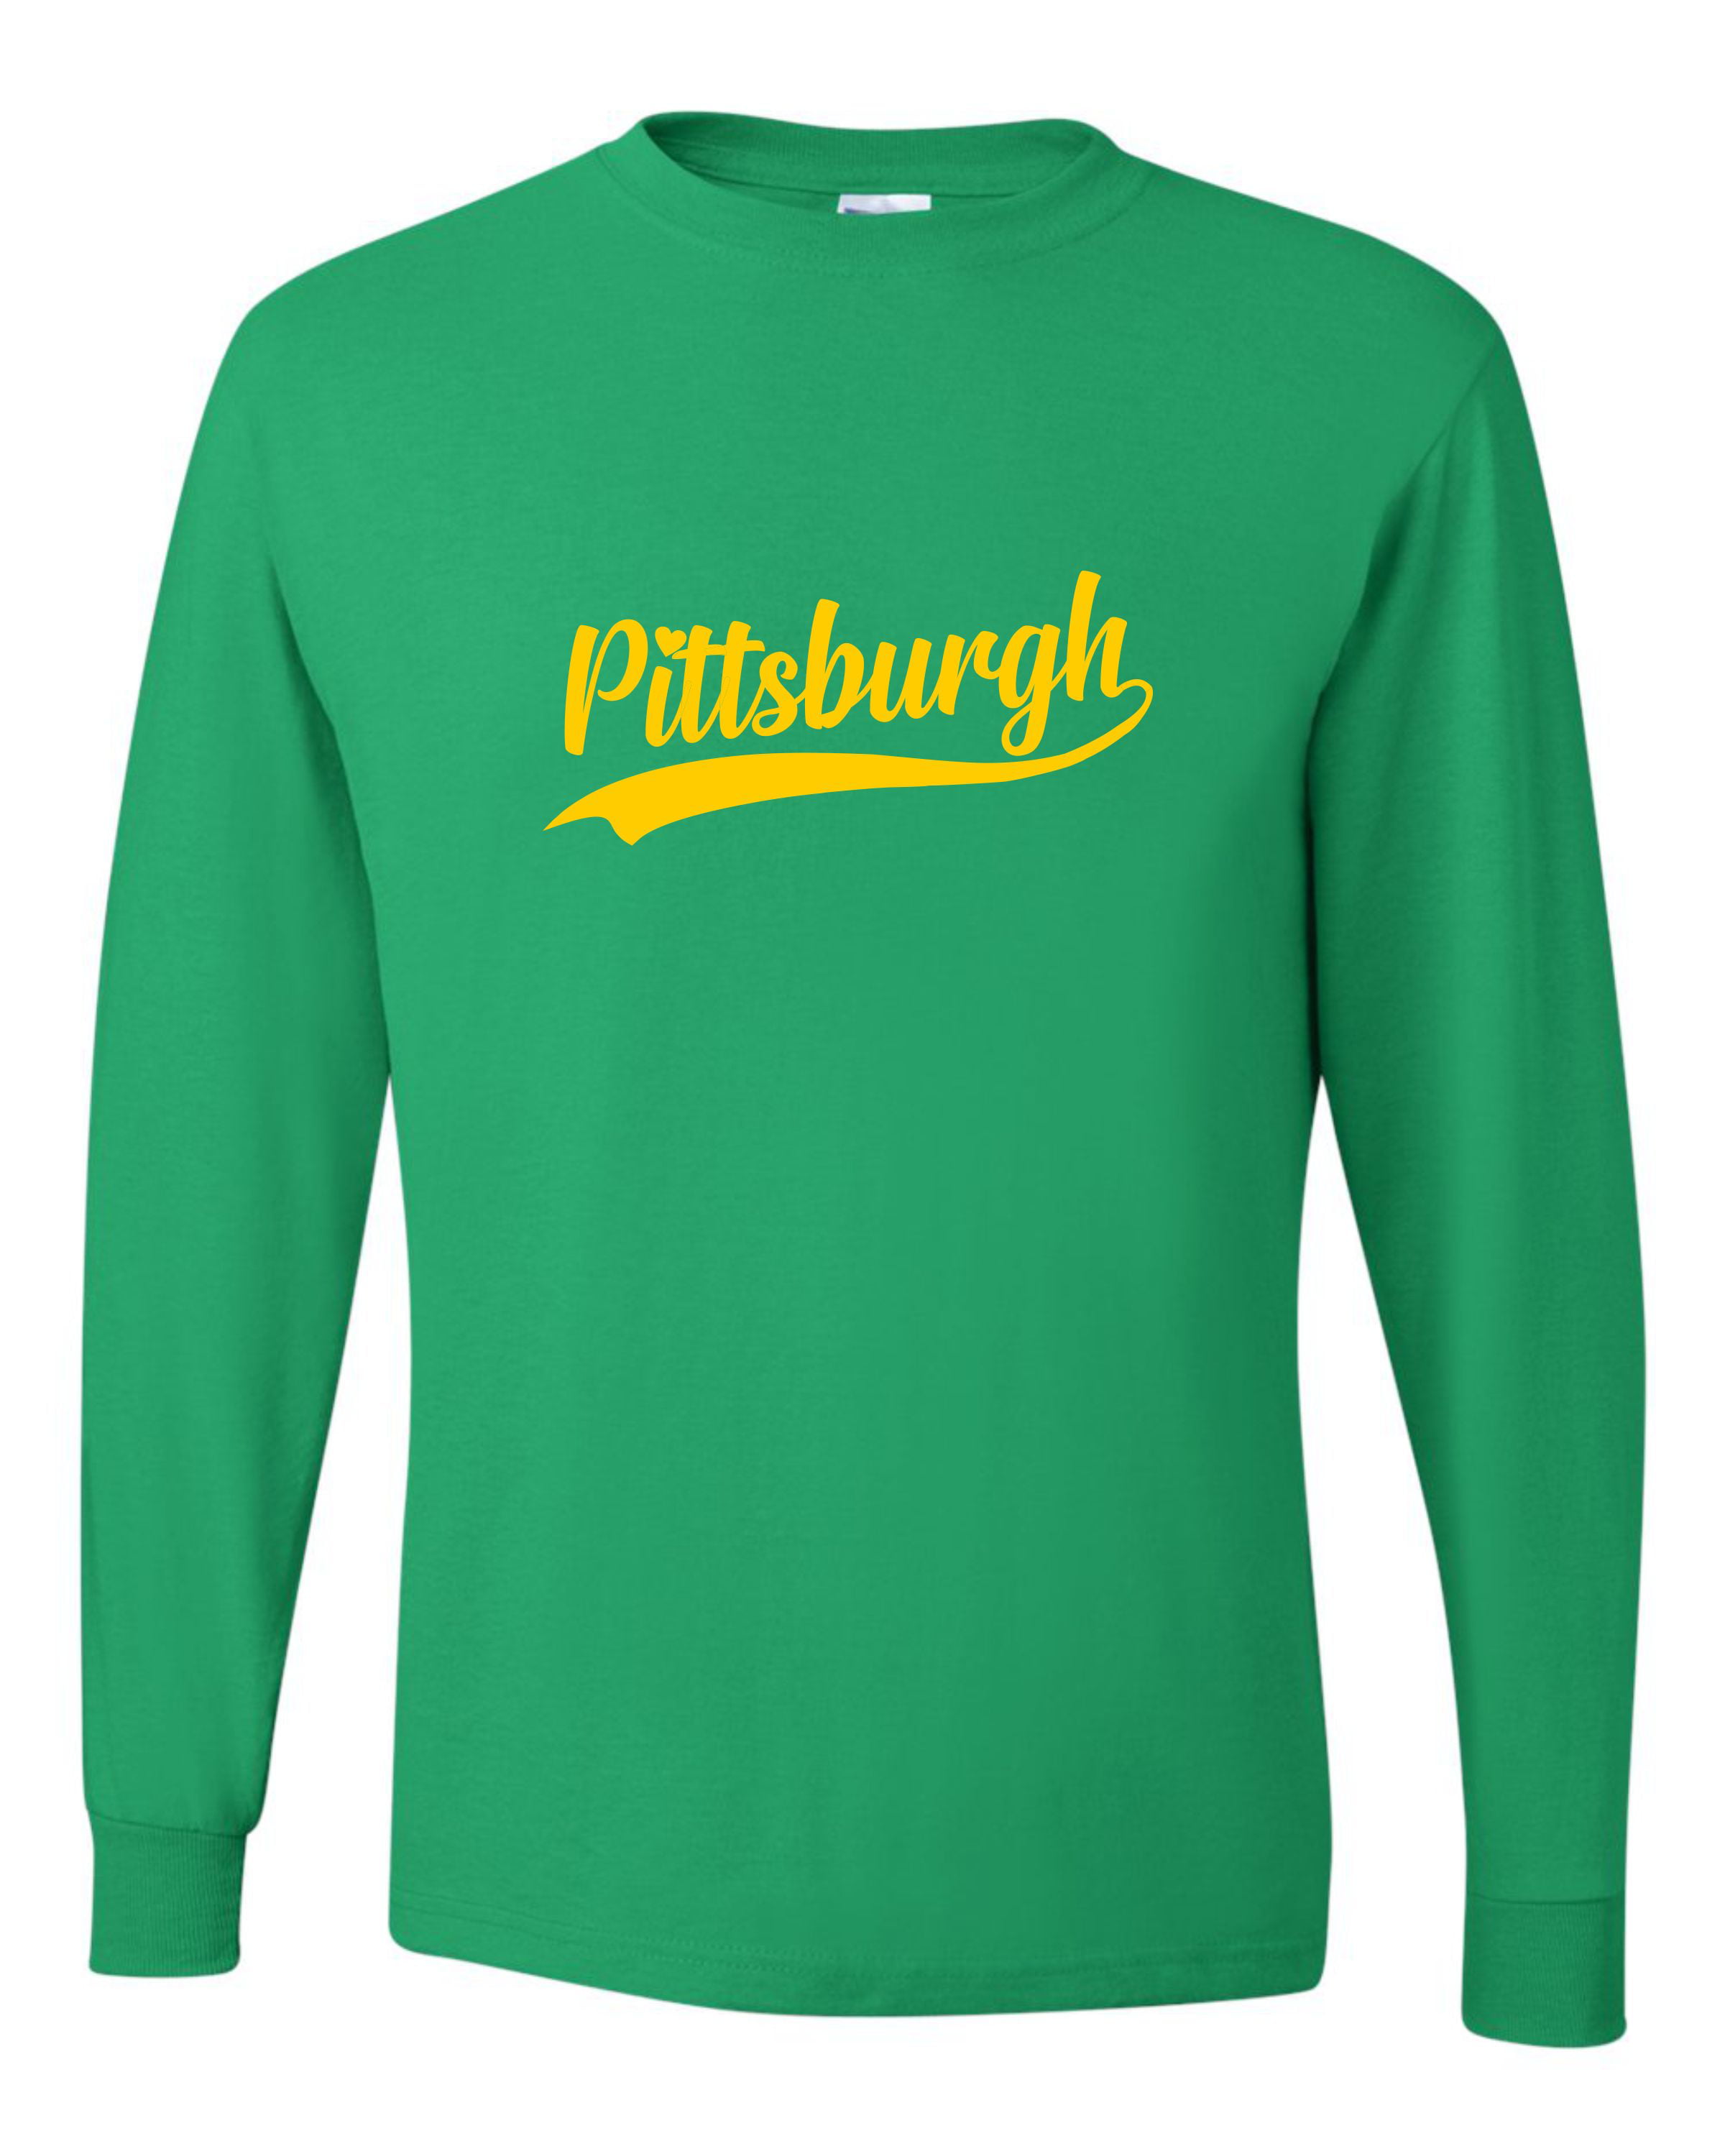 Mens 5050 T-Shirt  Pittsburgh Clothing Company